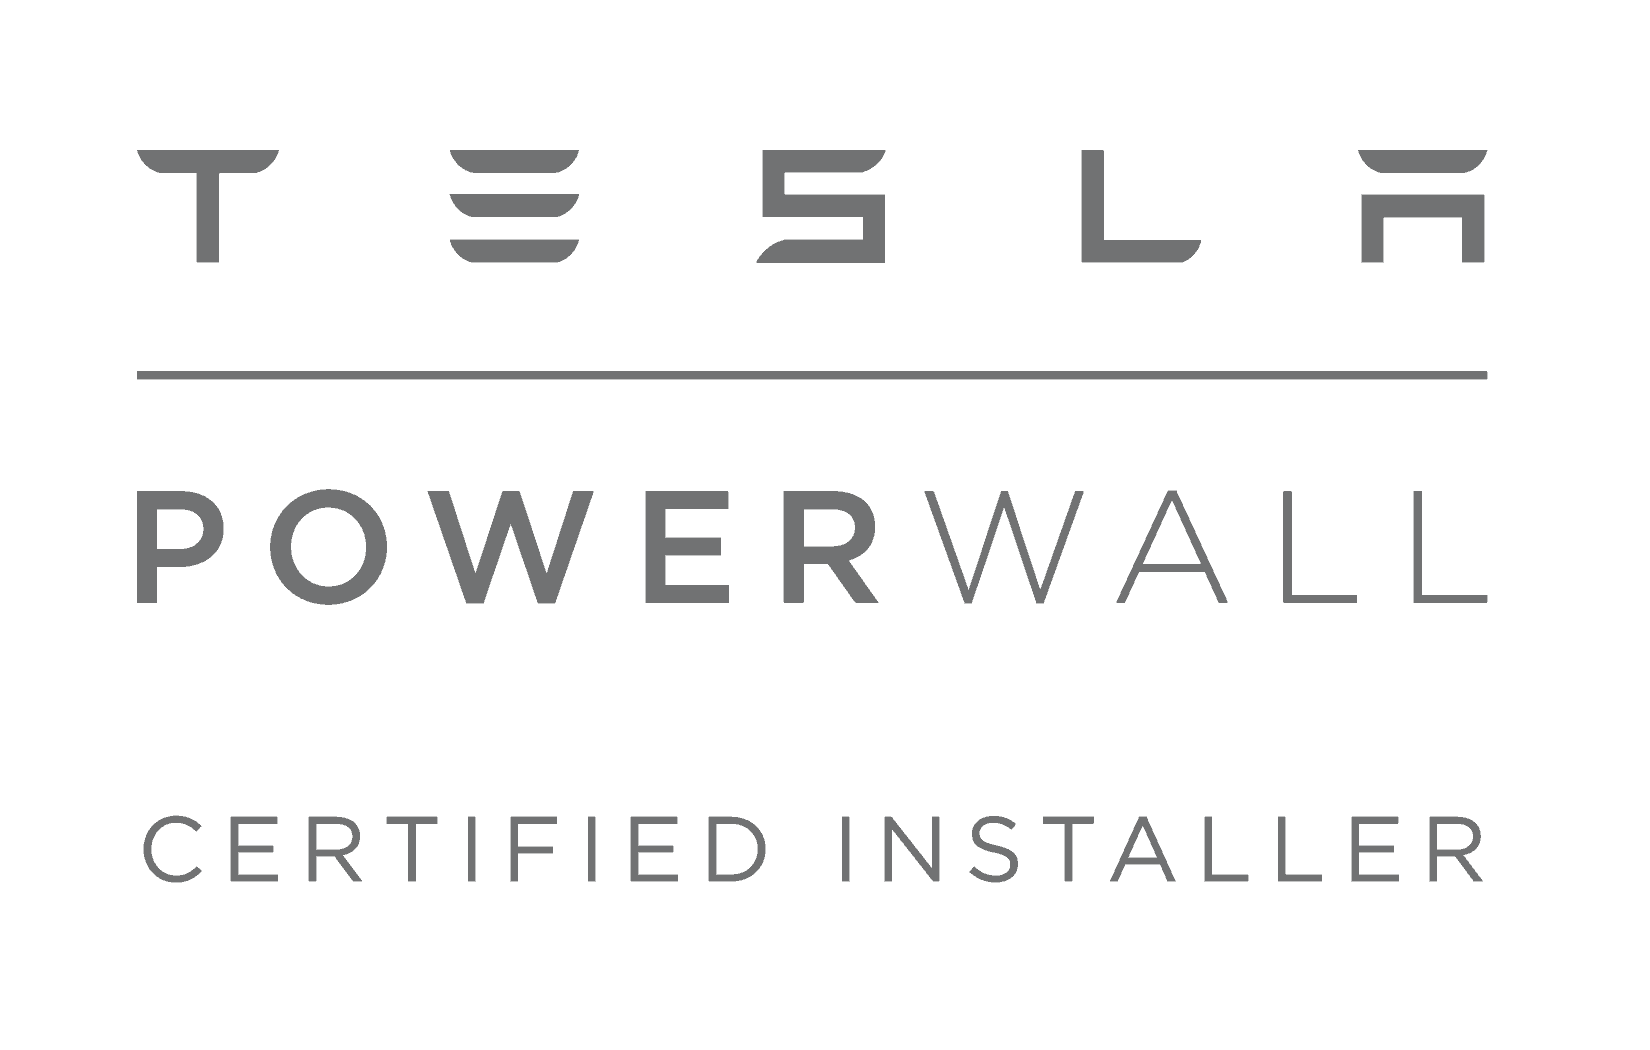 We are a Tesla PowerWall Certified Installer